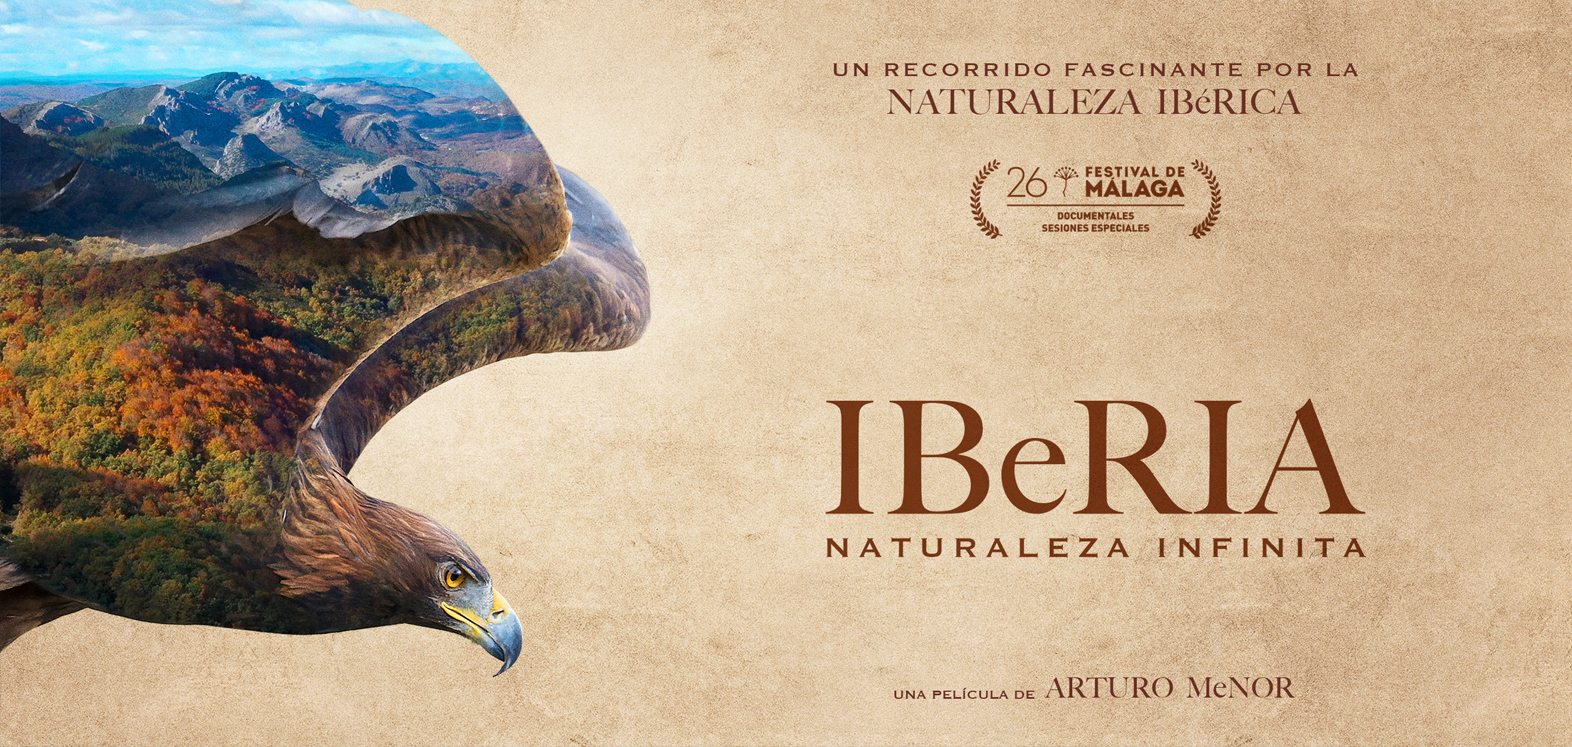 Pedro Cabañas - Design - IBERIA, naturaleza infinita